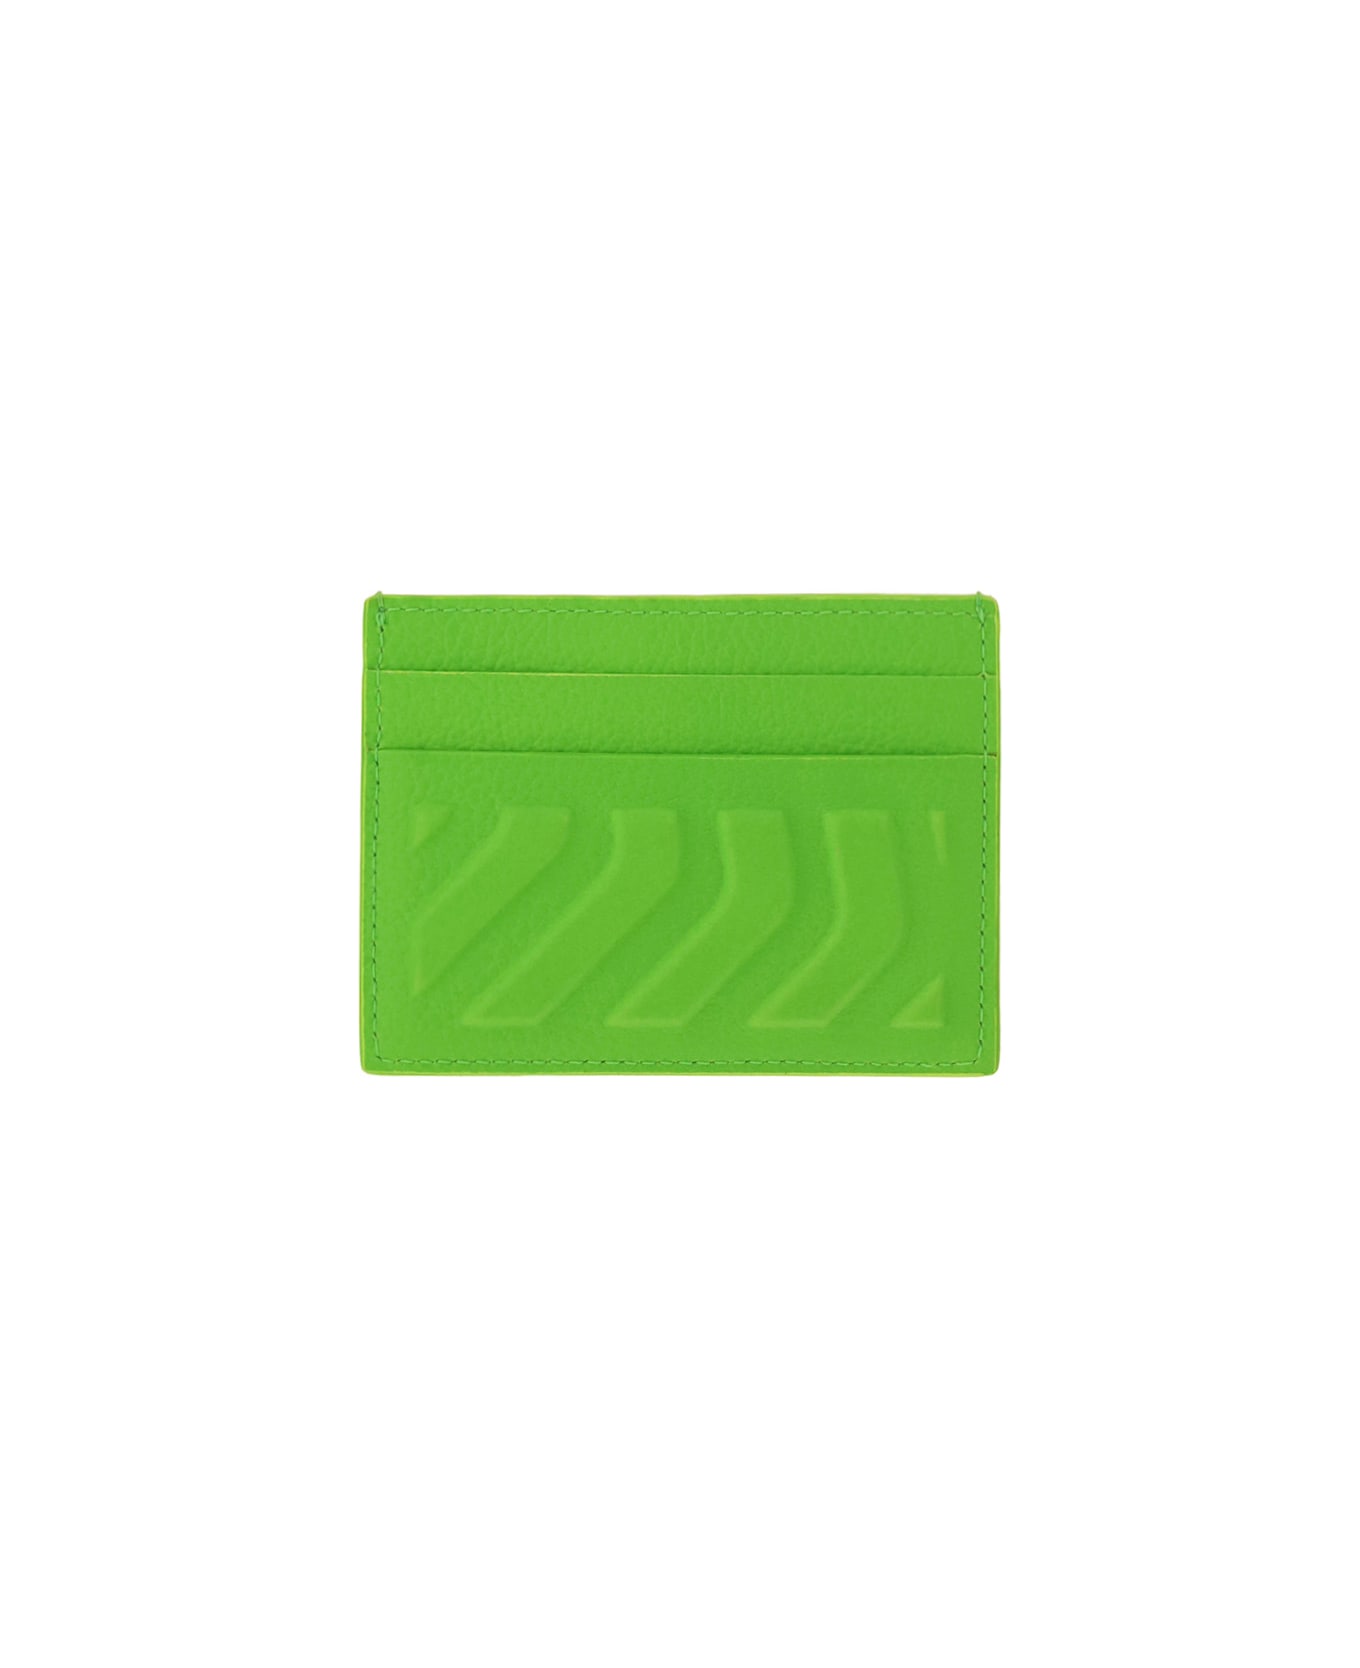 Balenciaga Card Holder - Acid Green